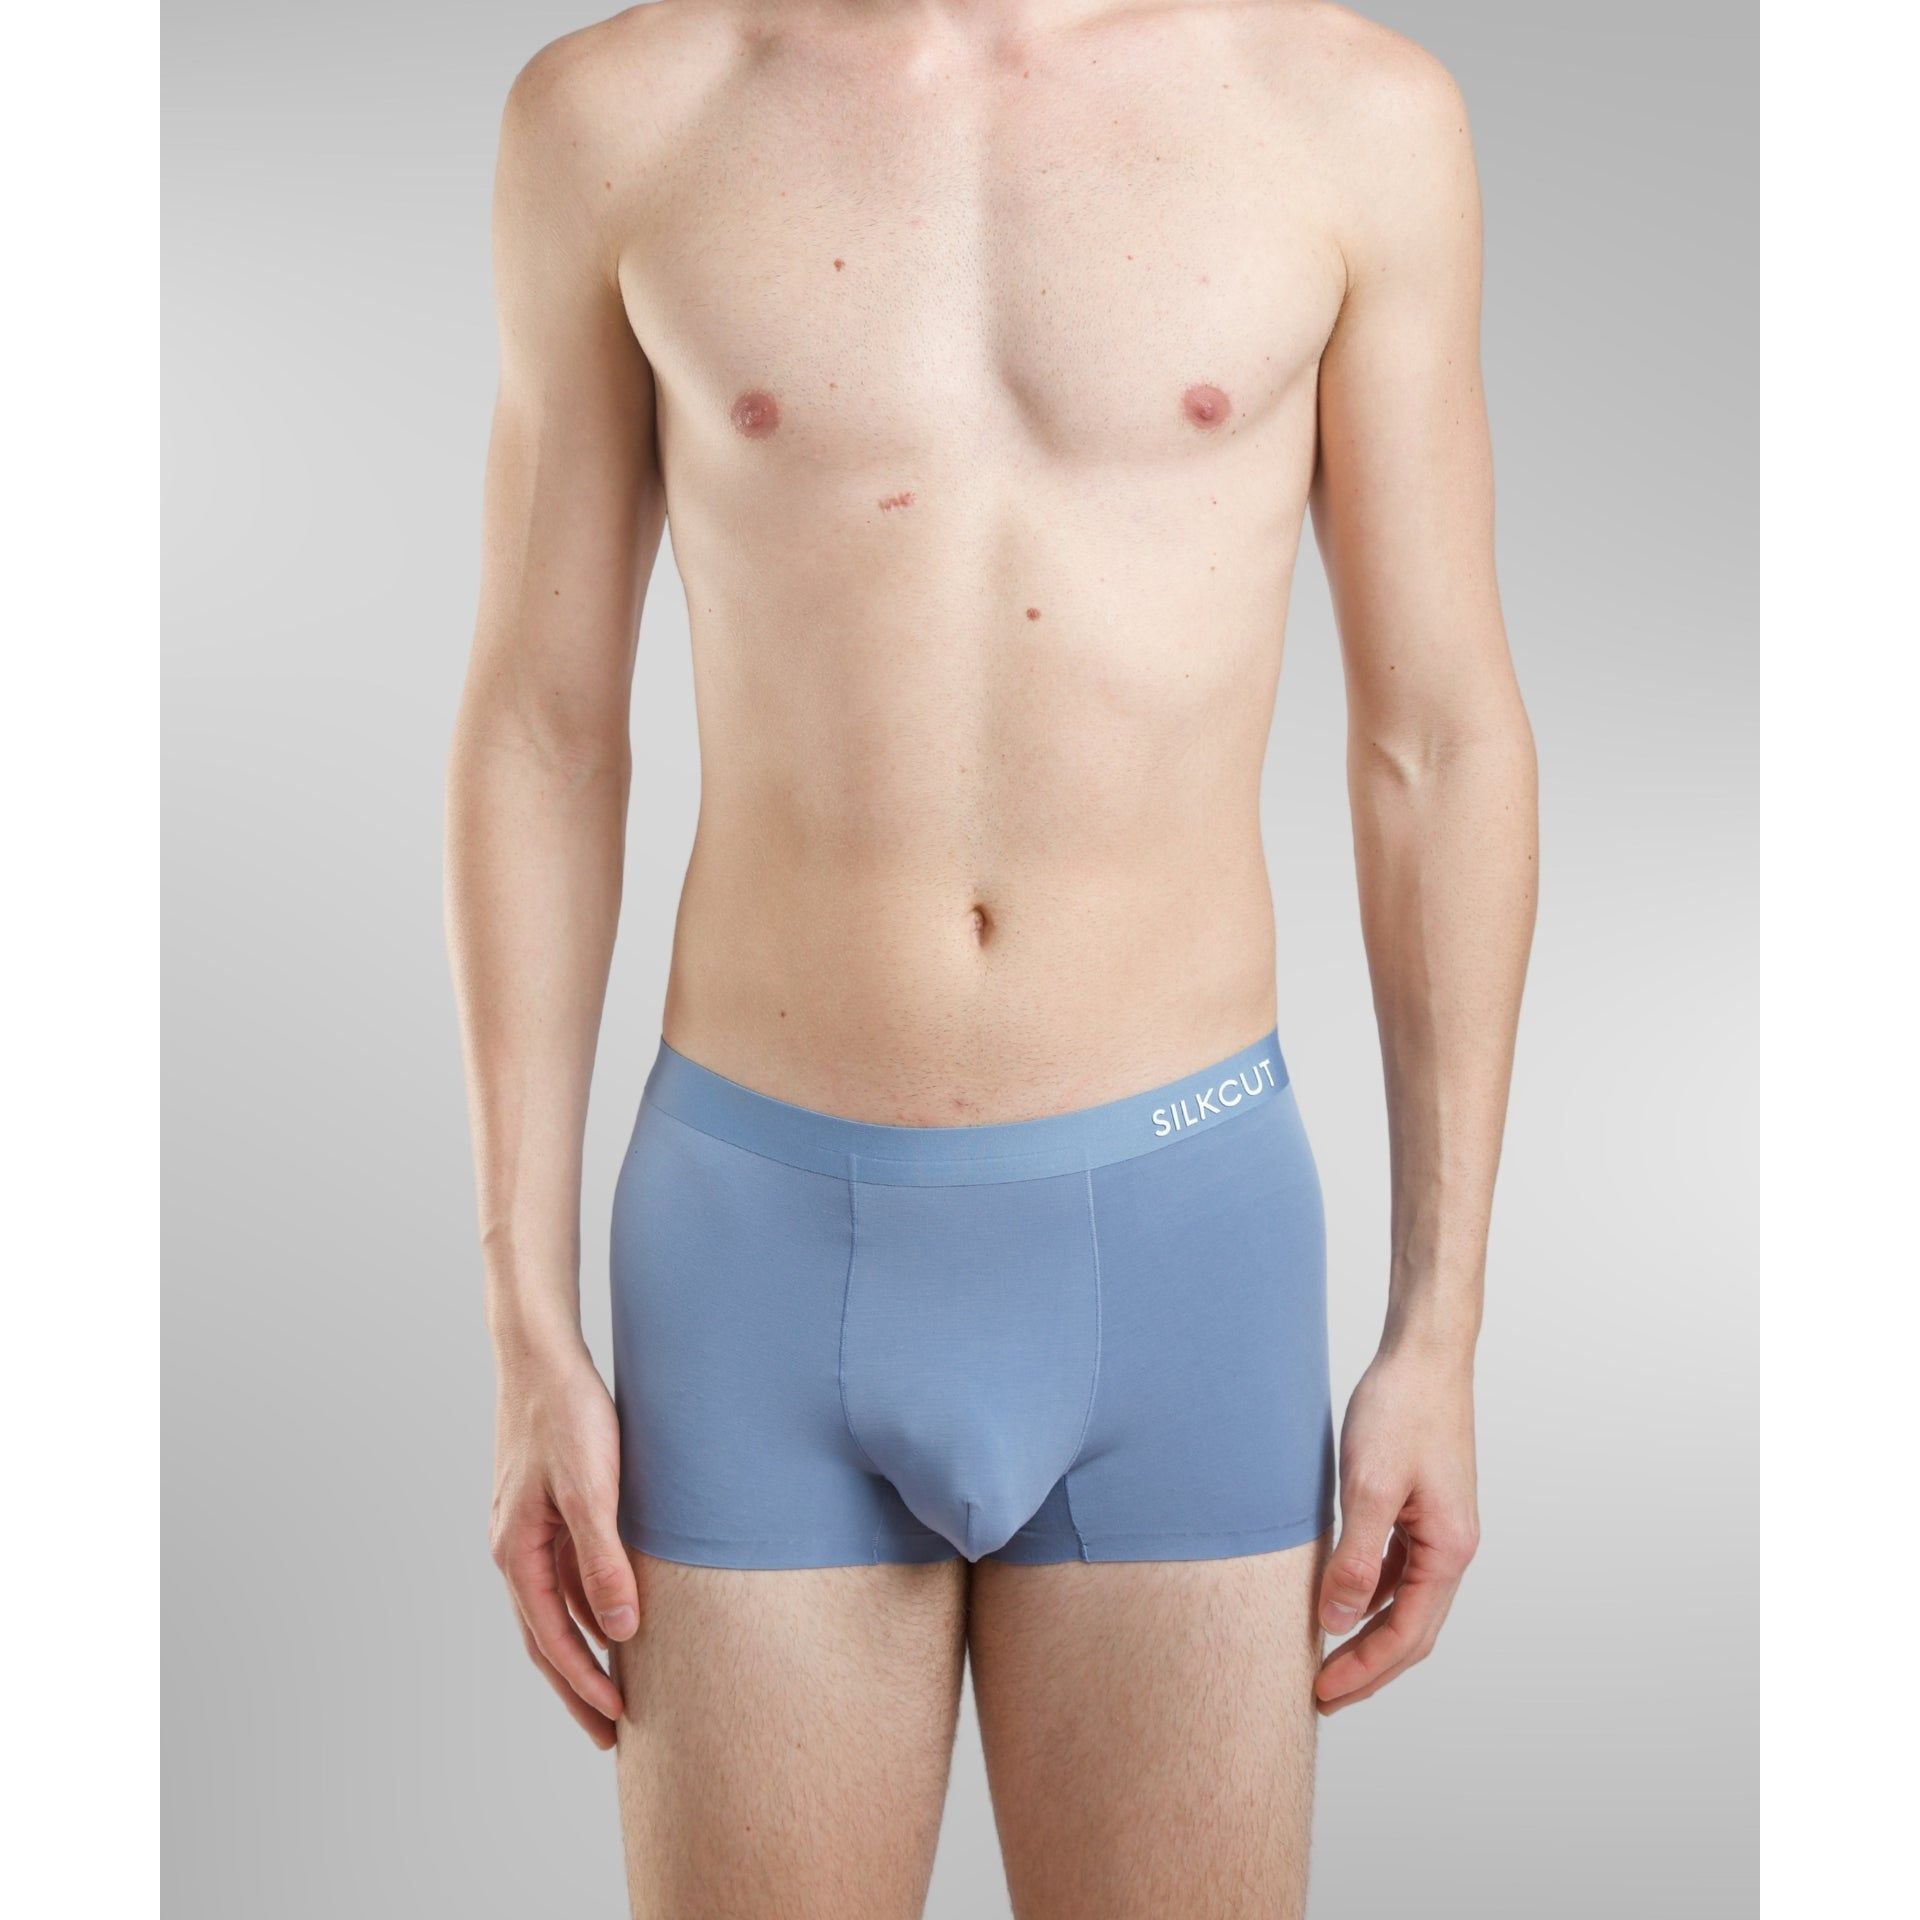 man in blue trunk underwear